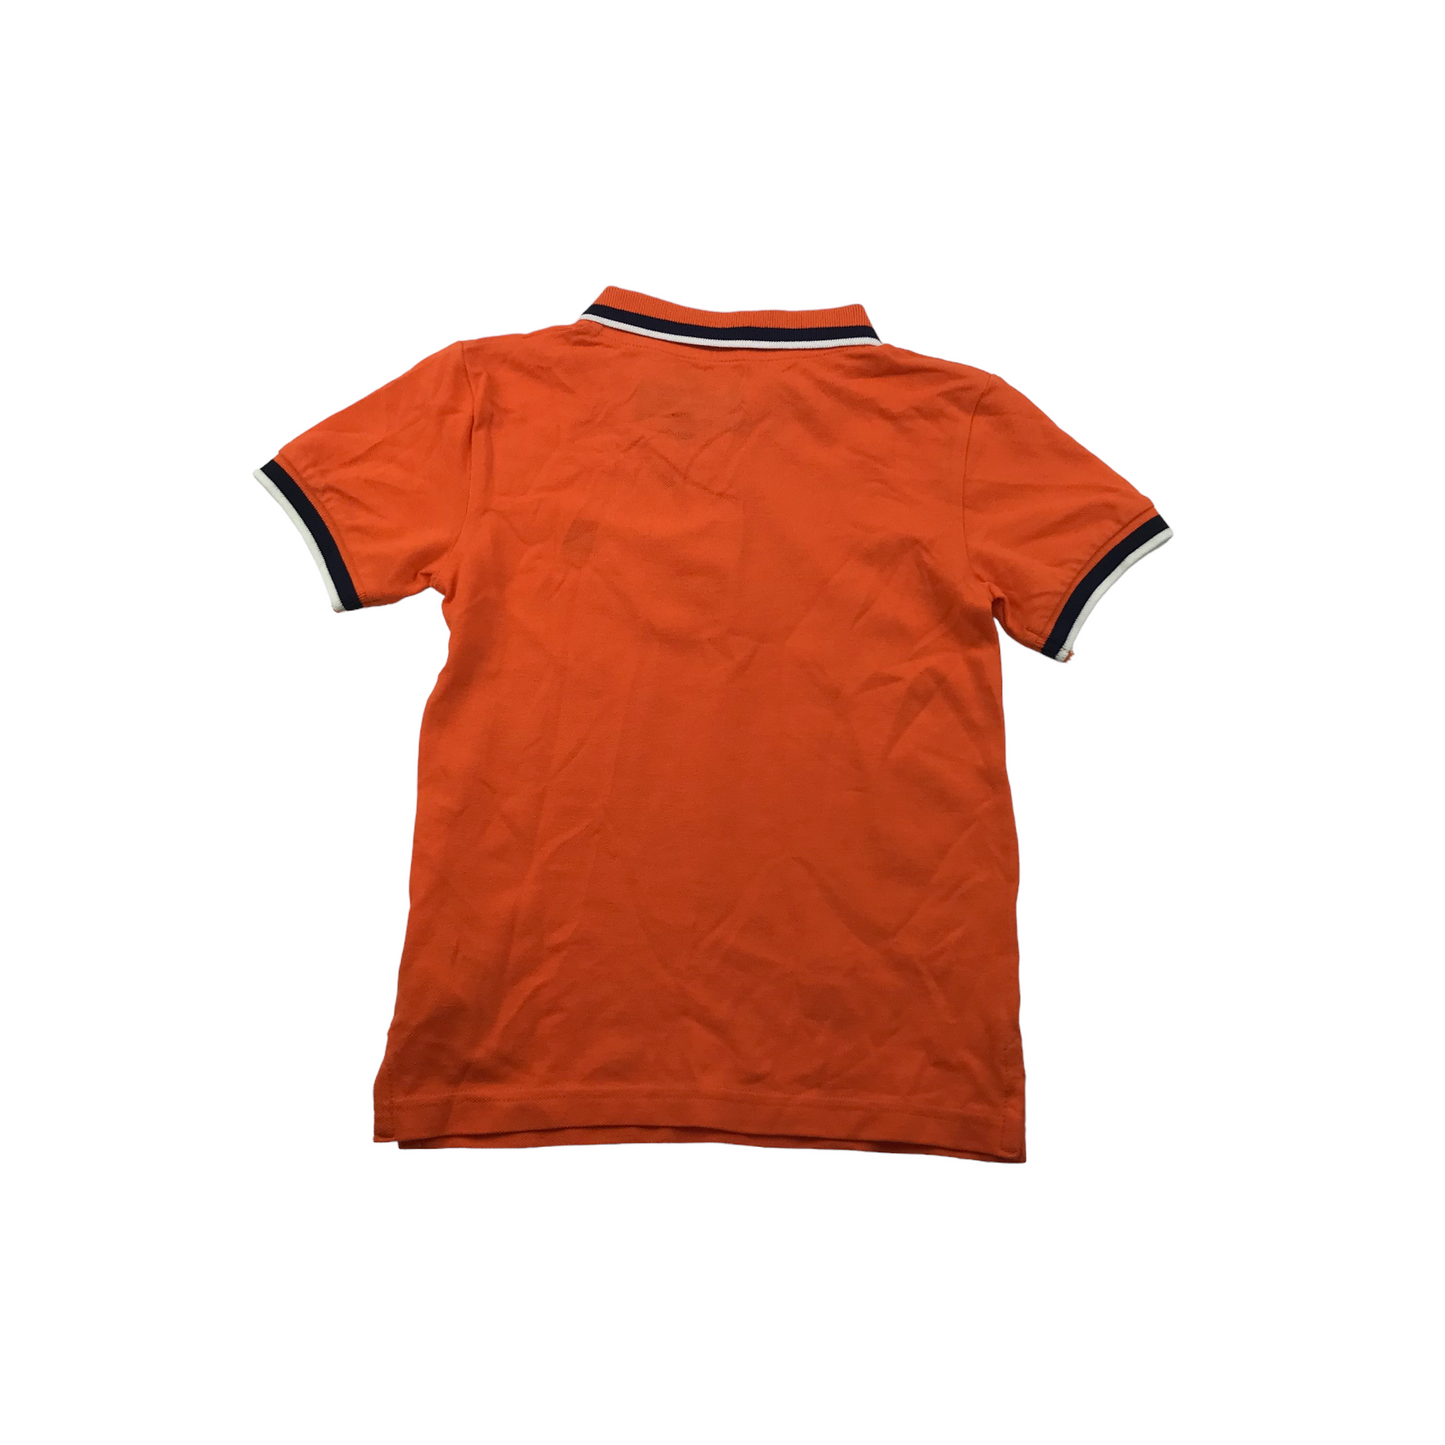 Bluezoo Bright Orange Polo shirt Age 5